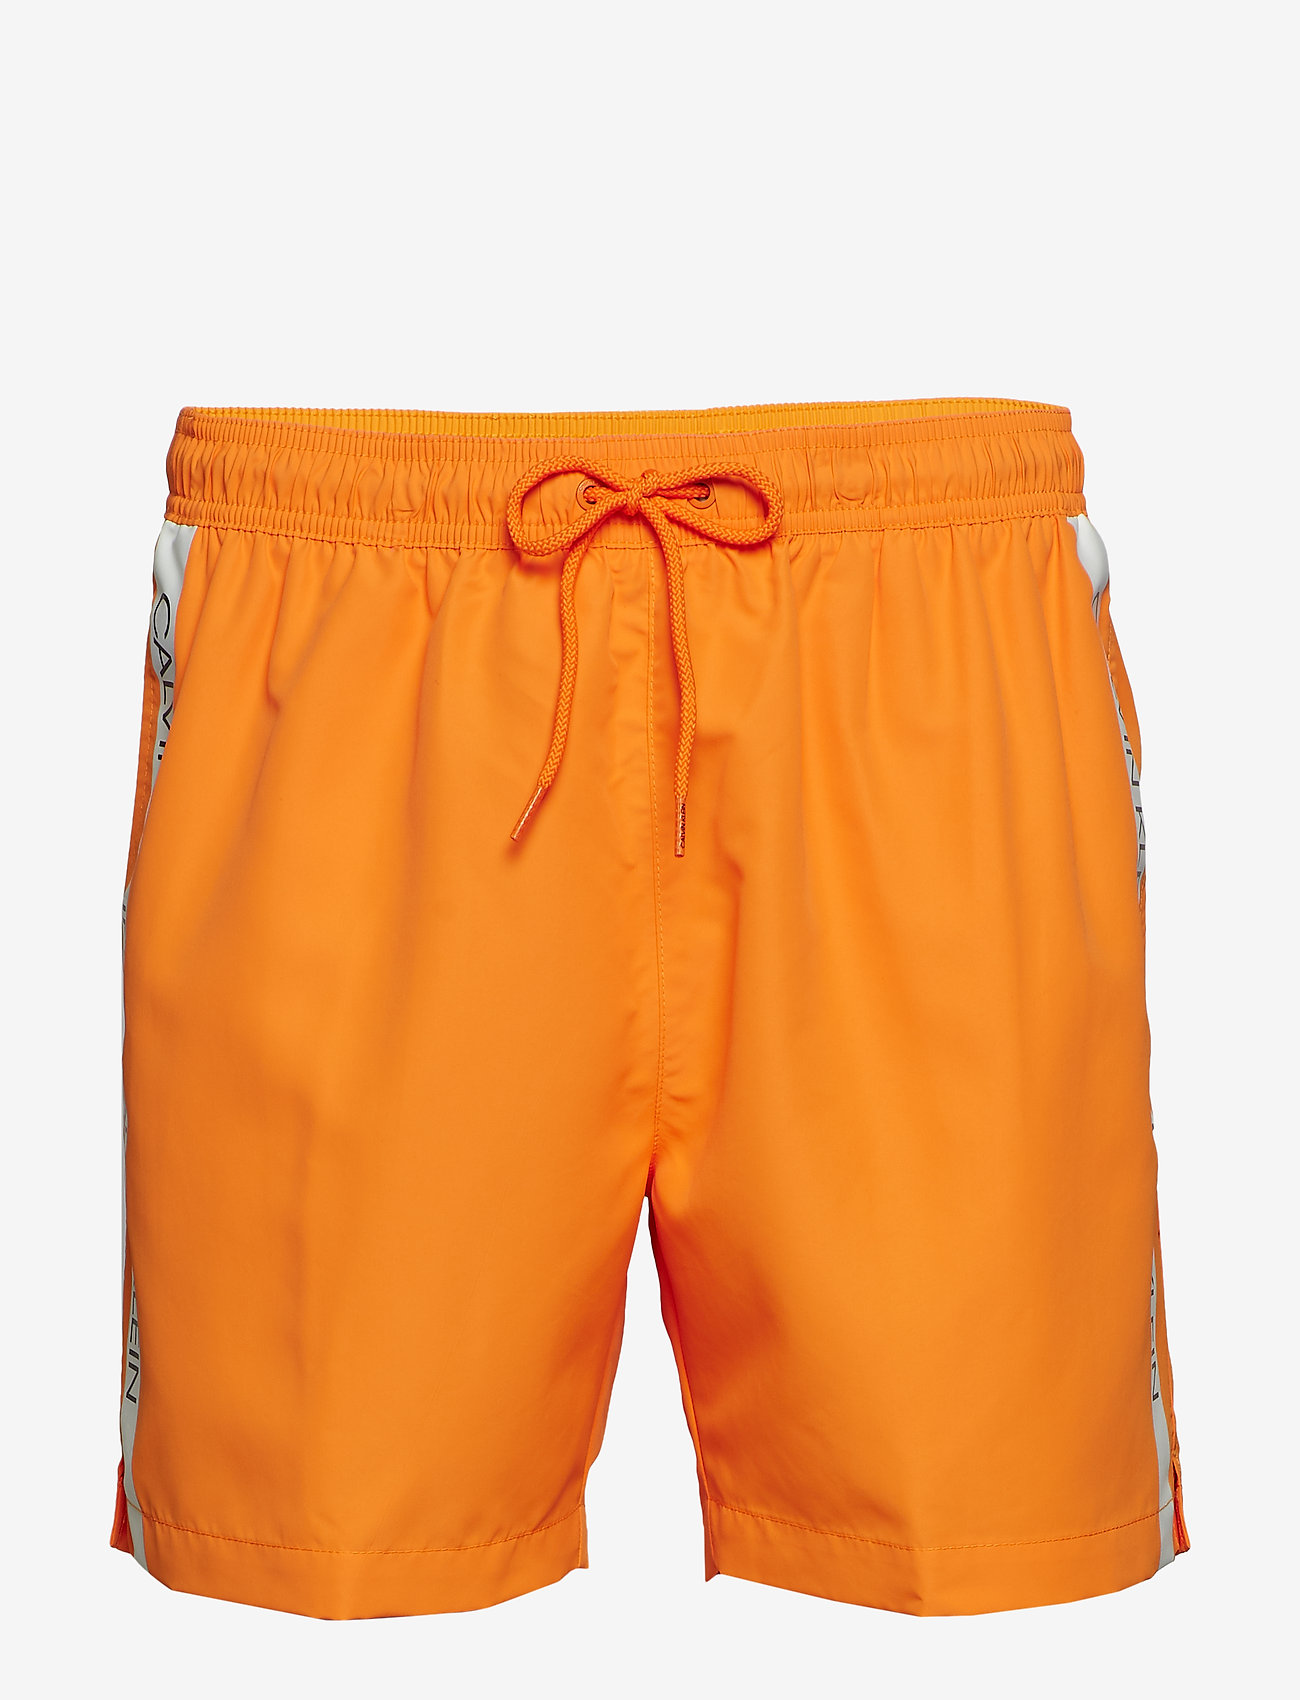 calvin klein yellow swim shorts